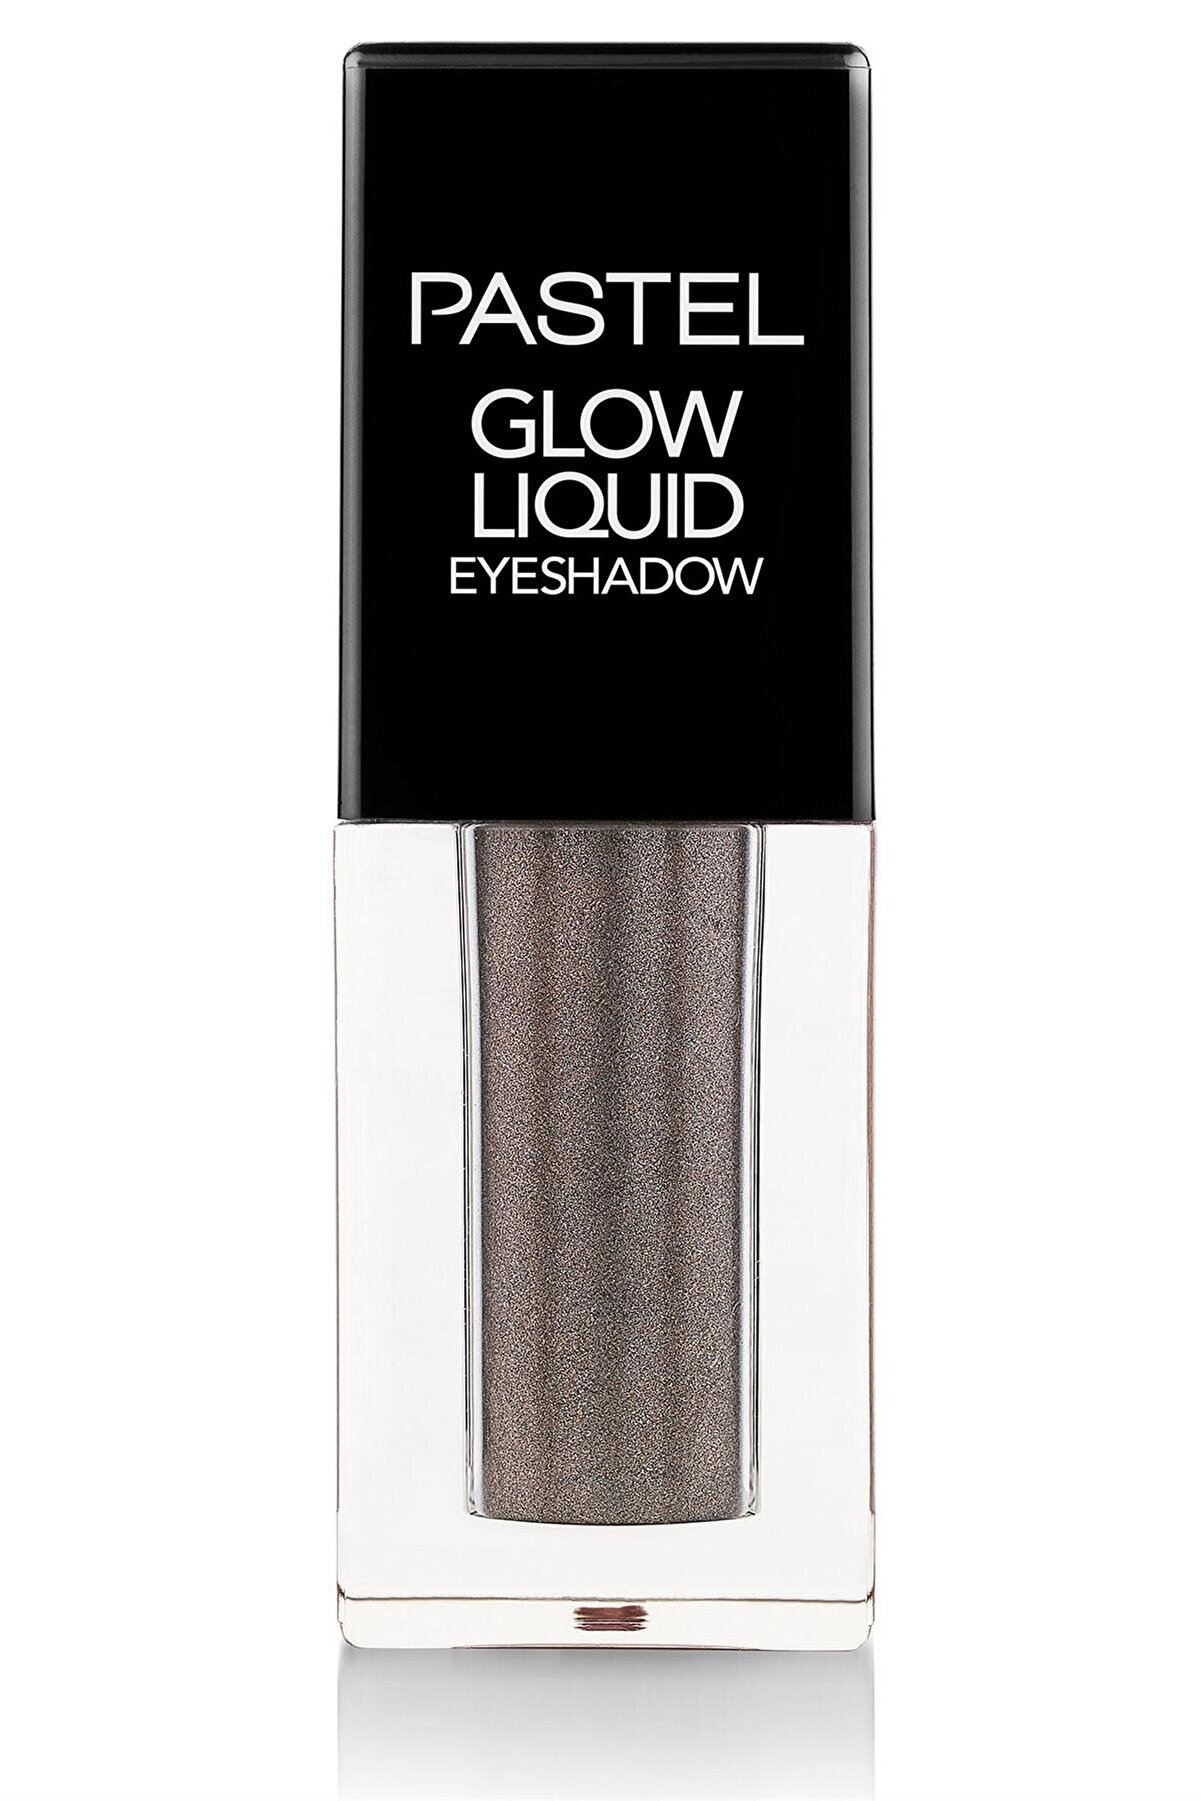 Pastel Glow Liquid Eyeshadow - Likit Far 223 Eye-catching